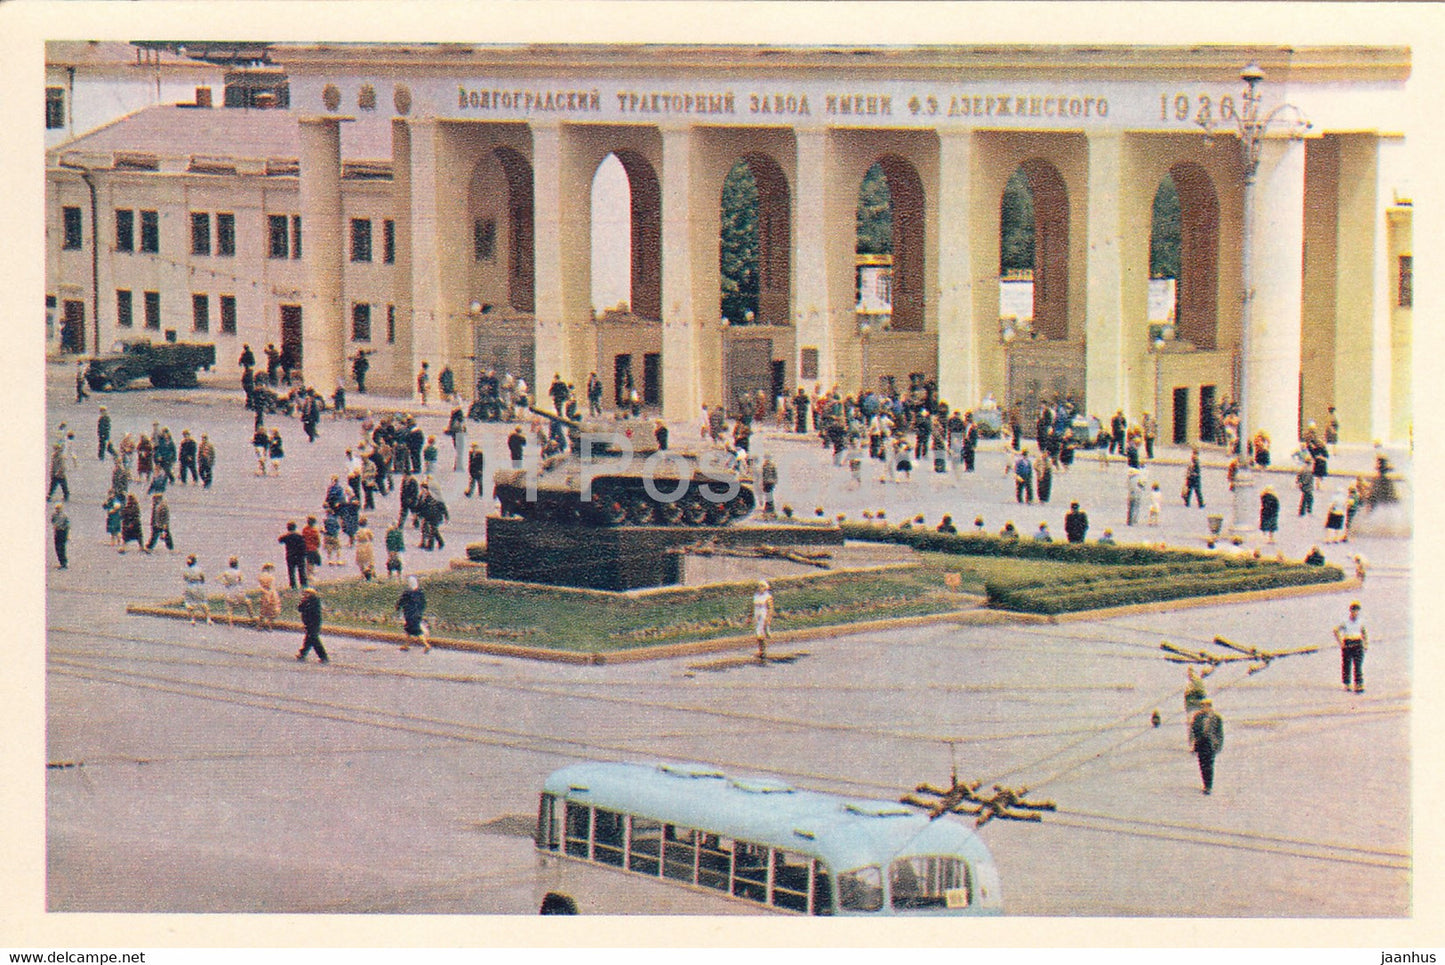 Volgograd - Main Entrance to the Dzerzhinsky Tractor Works - tank - bus - Russia USSR - unused - JH Postcards